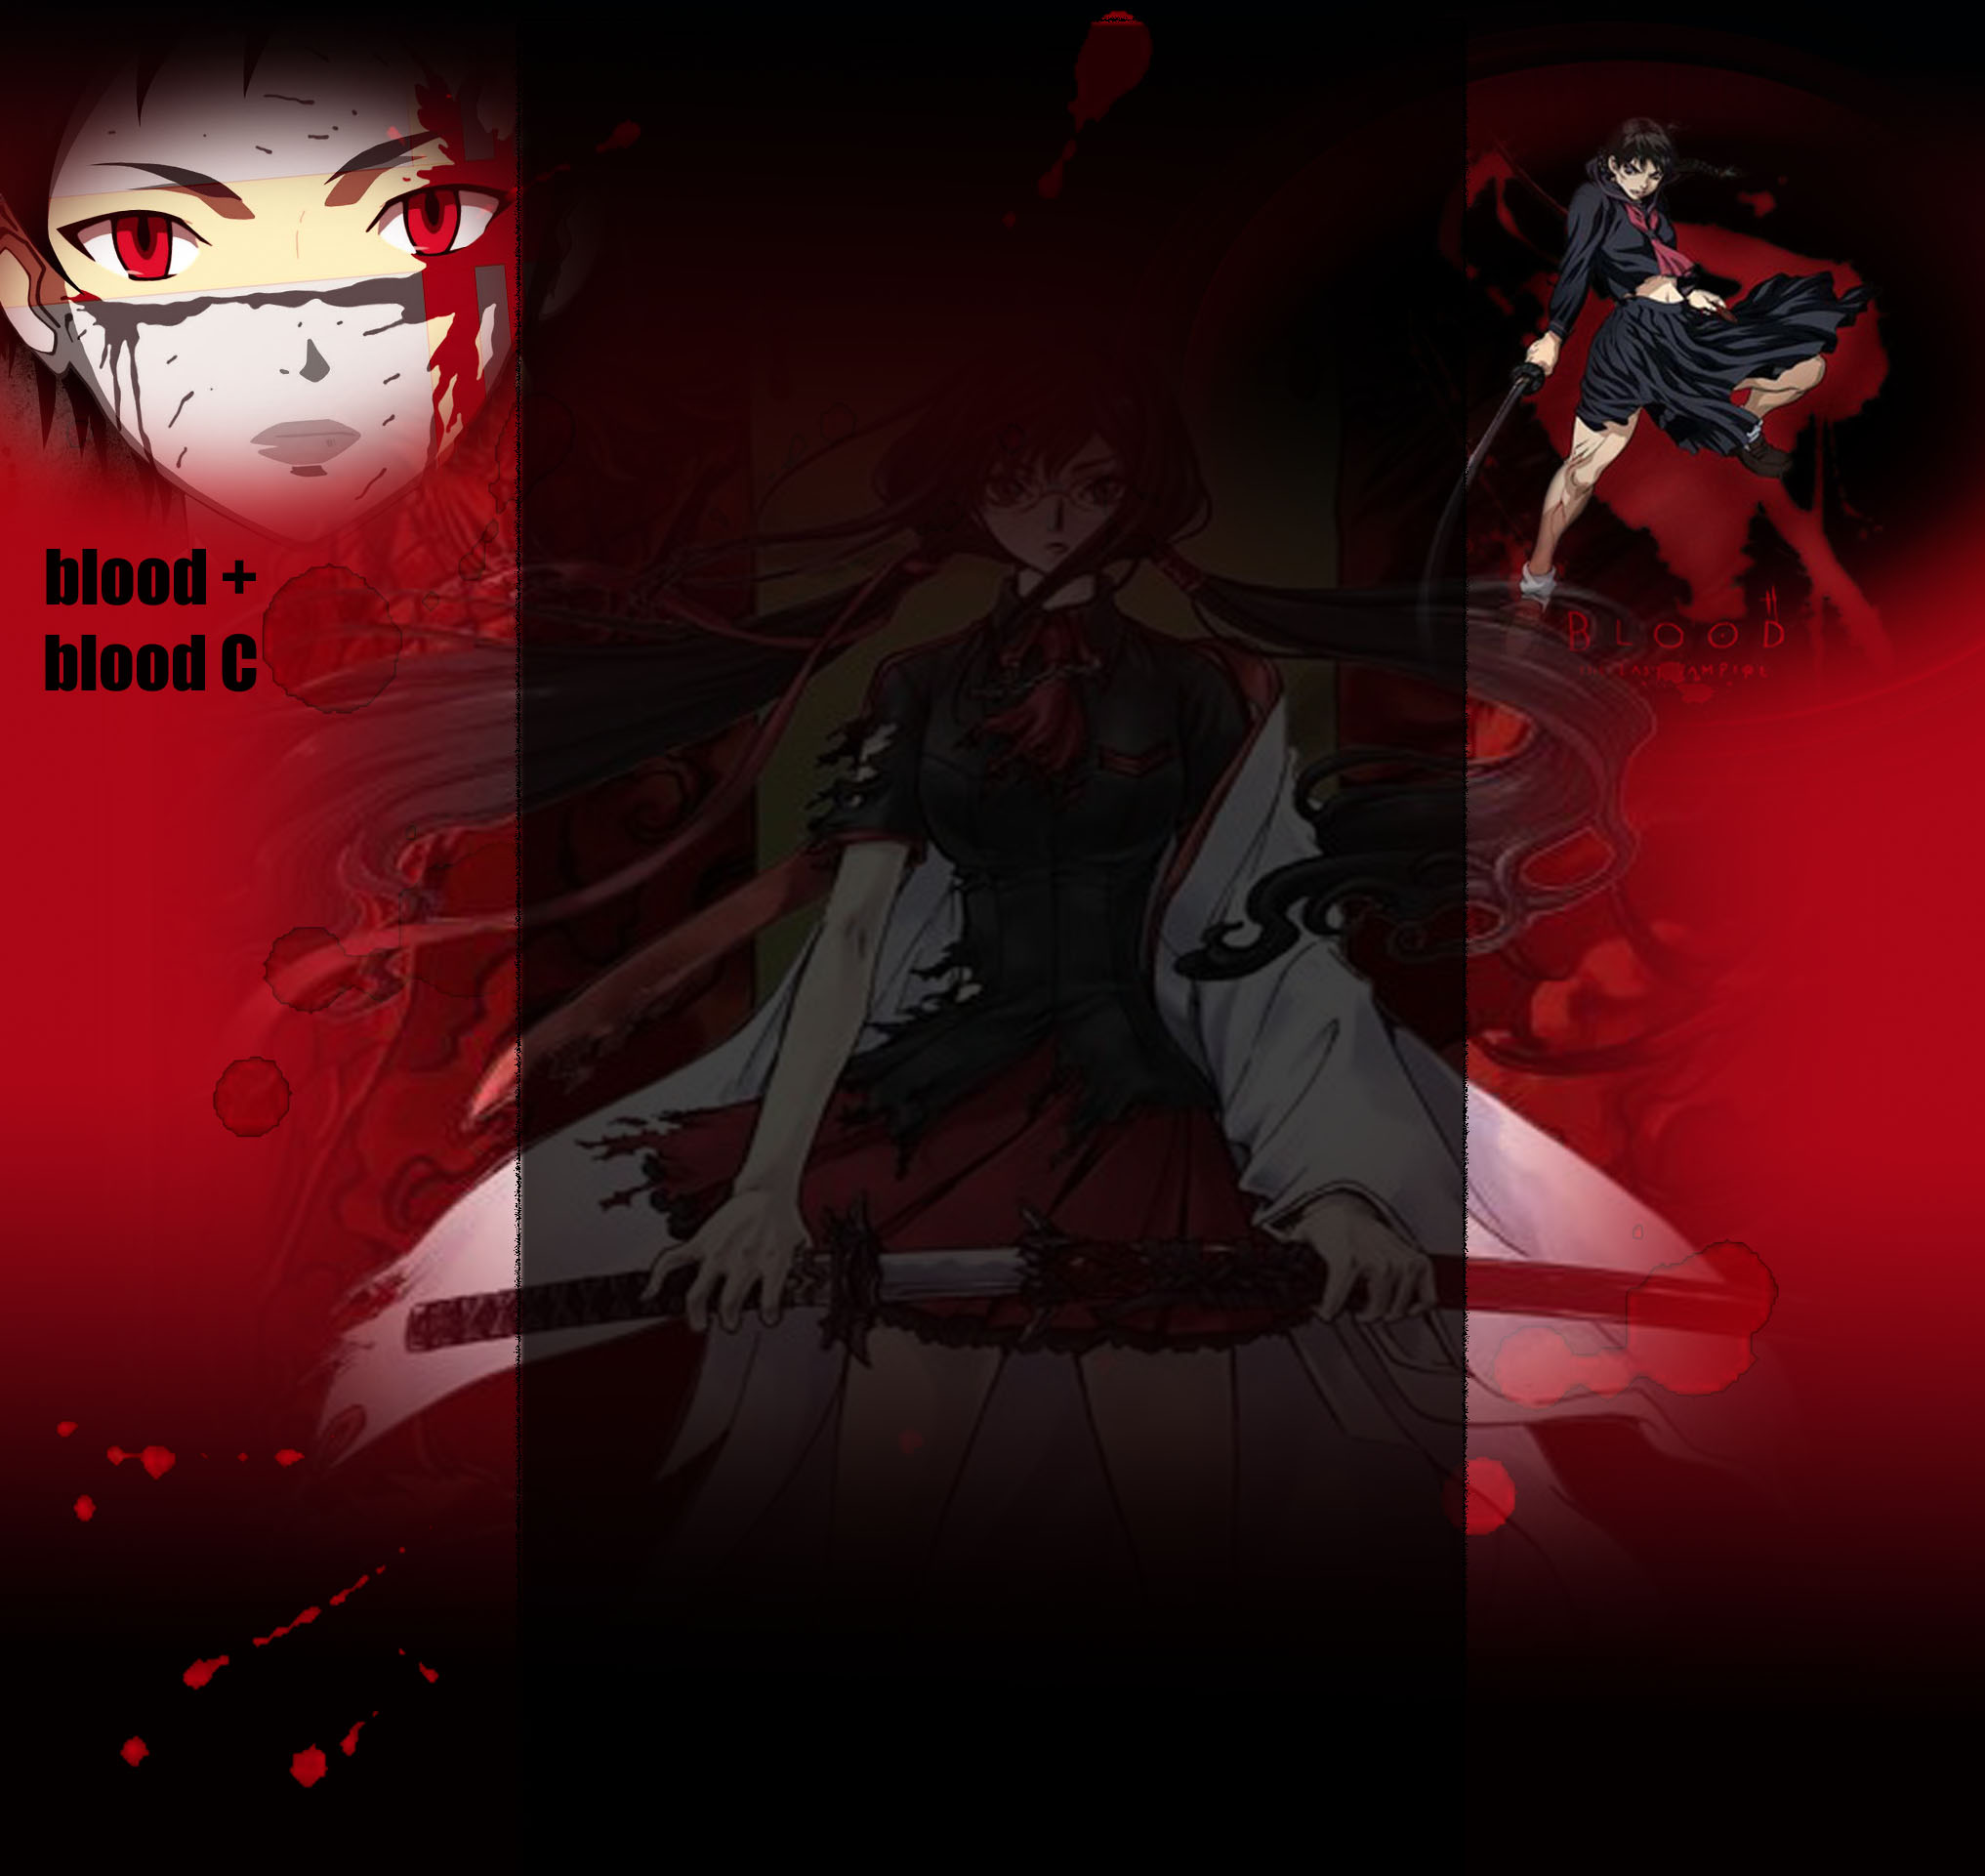 blood + anime youtube background by darkprinceofpersia1 on DeviantArt